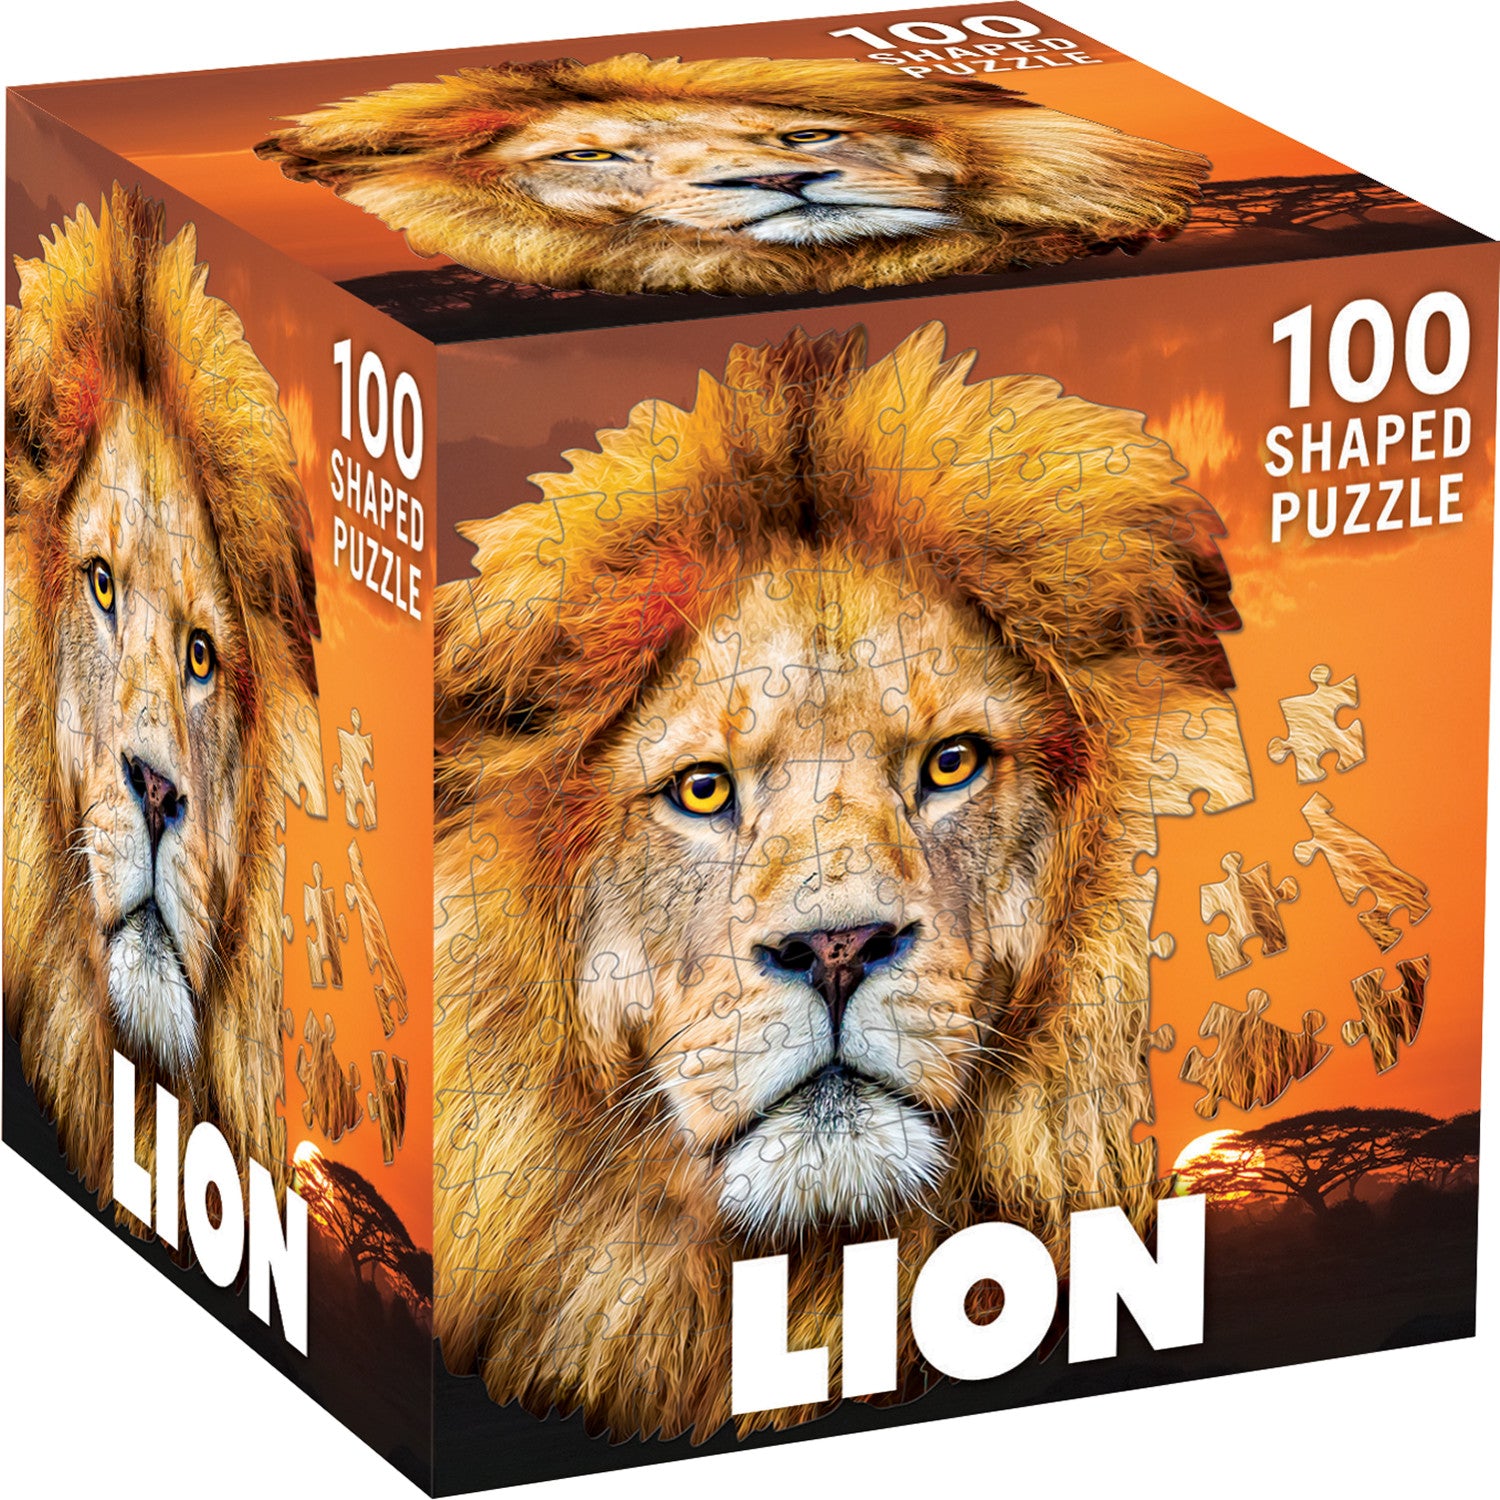 Lion 100 Piece Shaped Jigsaw Puzzle